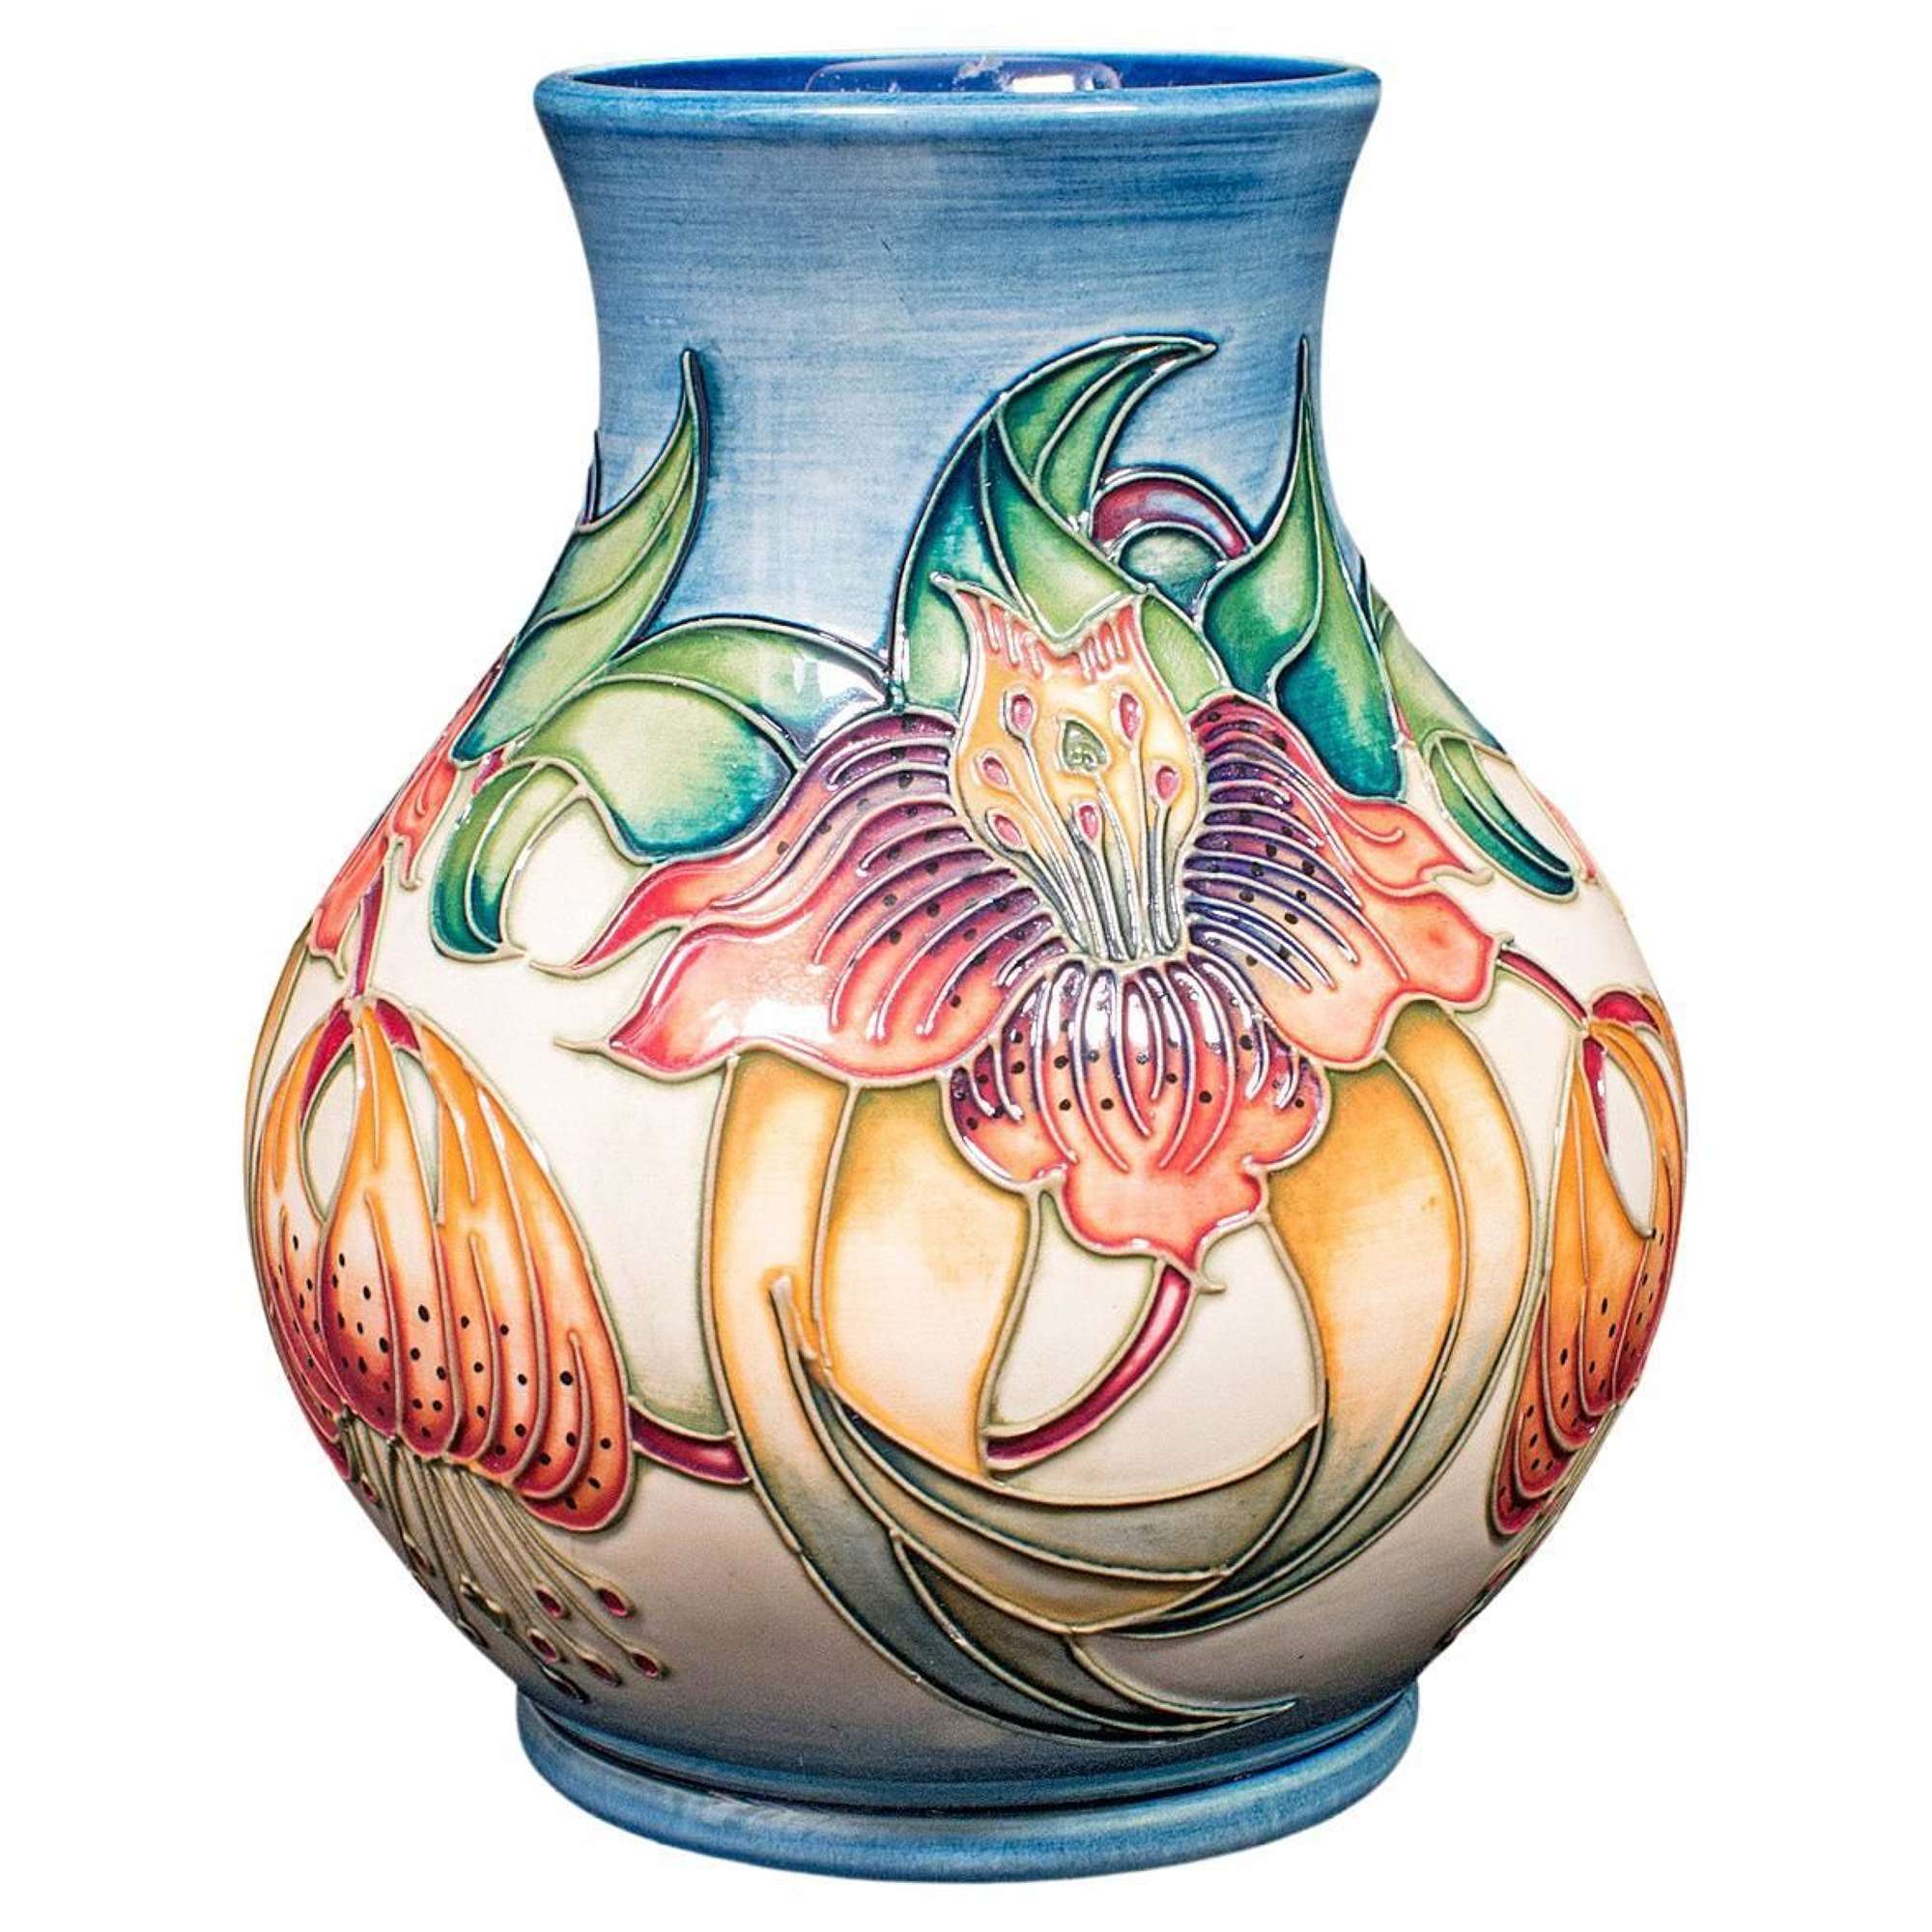 Small Vintage Decorative Posy Vase, English, Ceramic, Flower, Late 20th Century